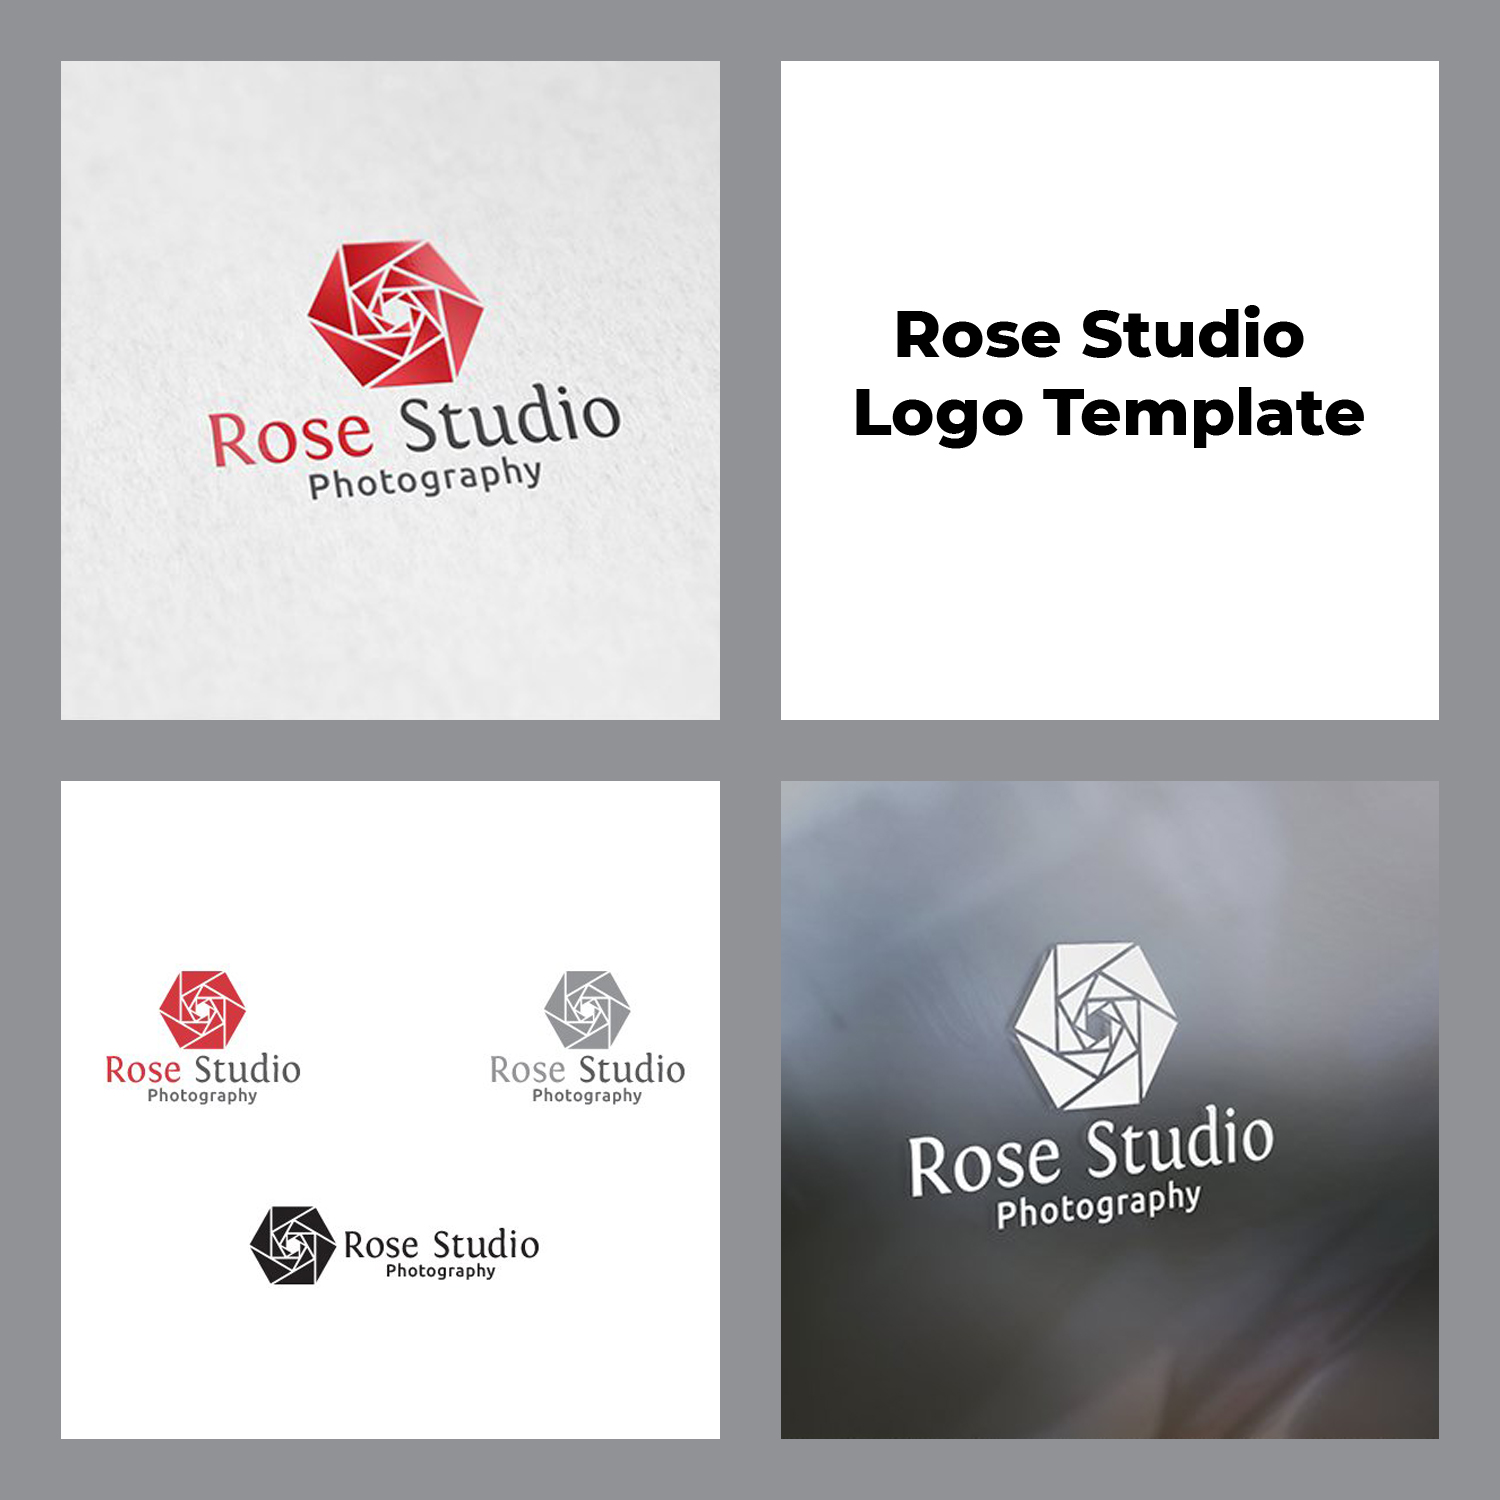 Rose studio logo template preview.